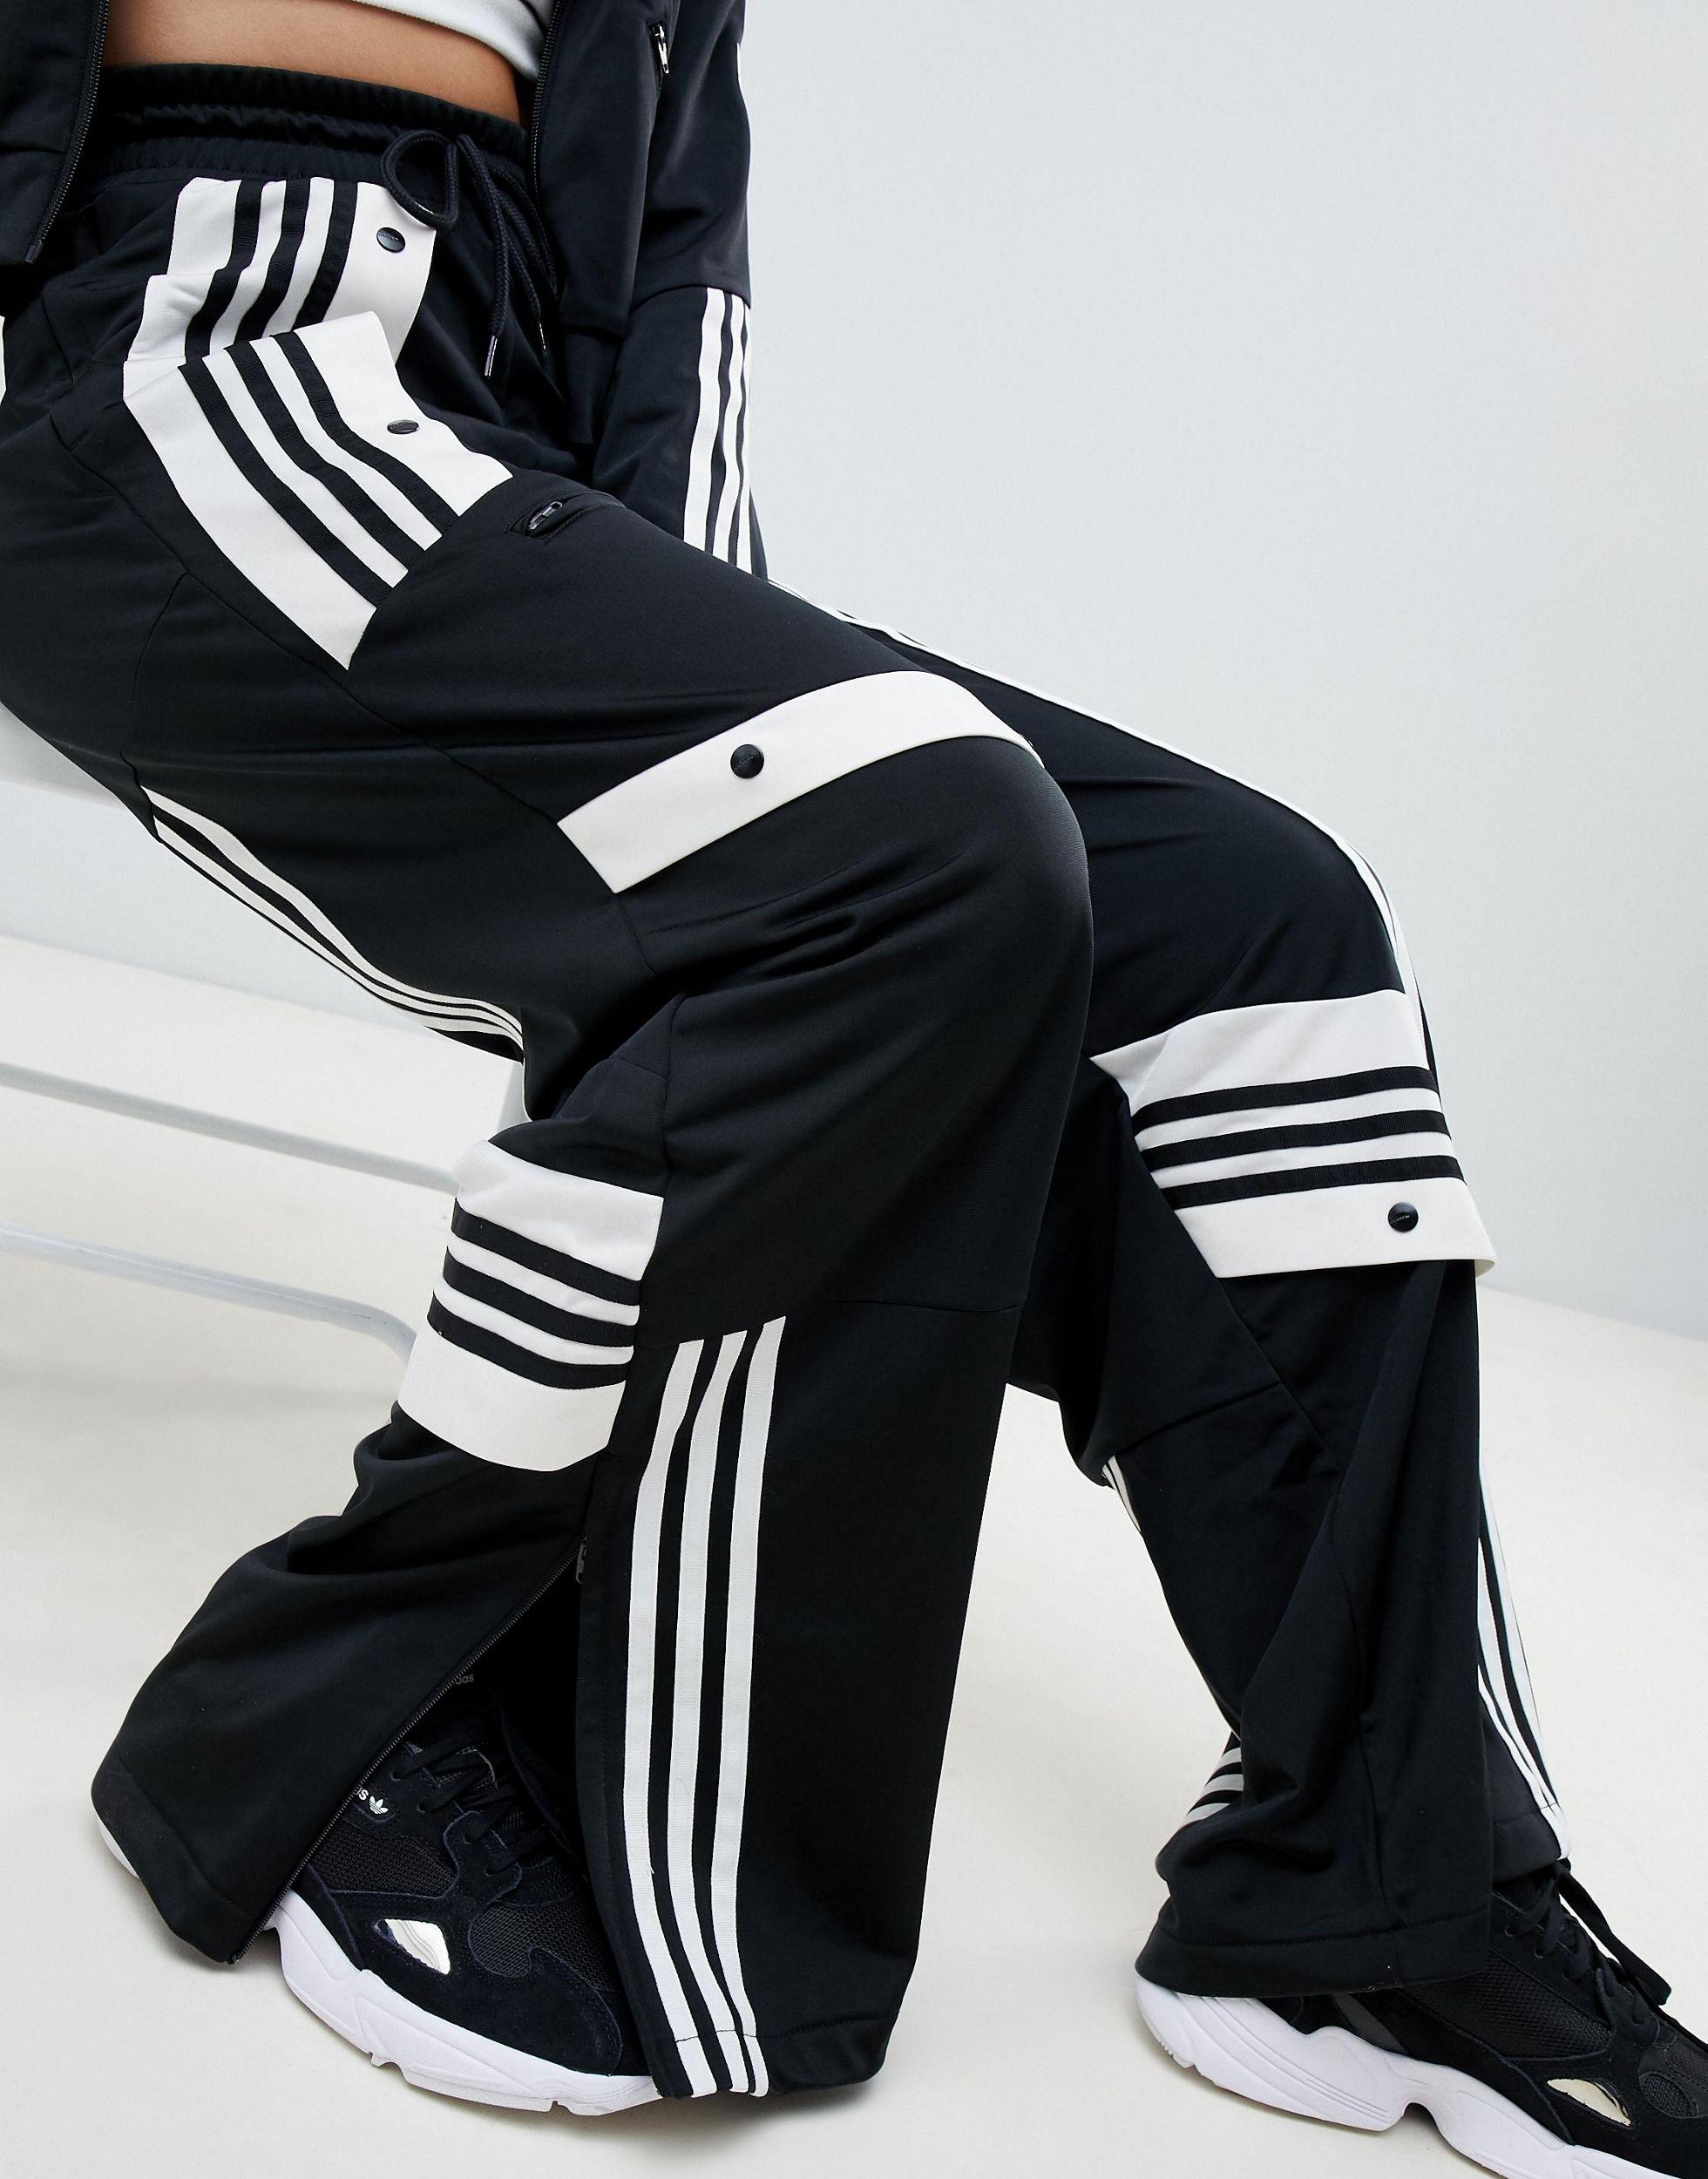 Adidas tracking. Adidas Danielle Cathari. Adidas Originals спортивные брюки Danielle Cathar. Штаны adidas Cathari. Штаны adidas Danielle Cathari.